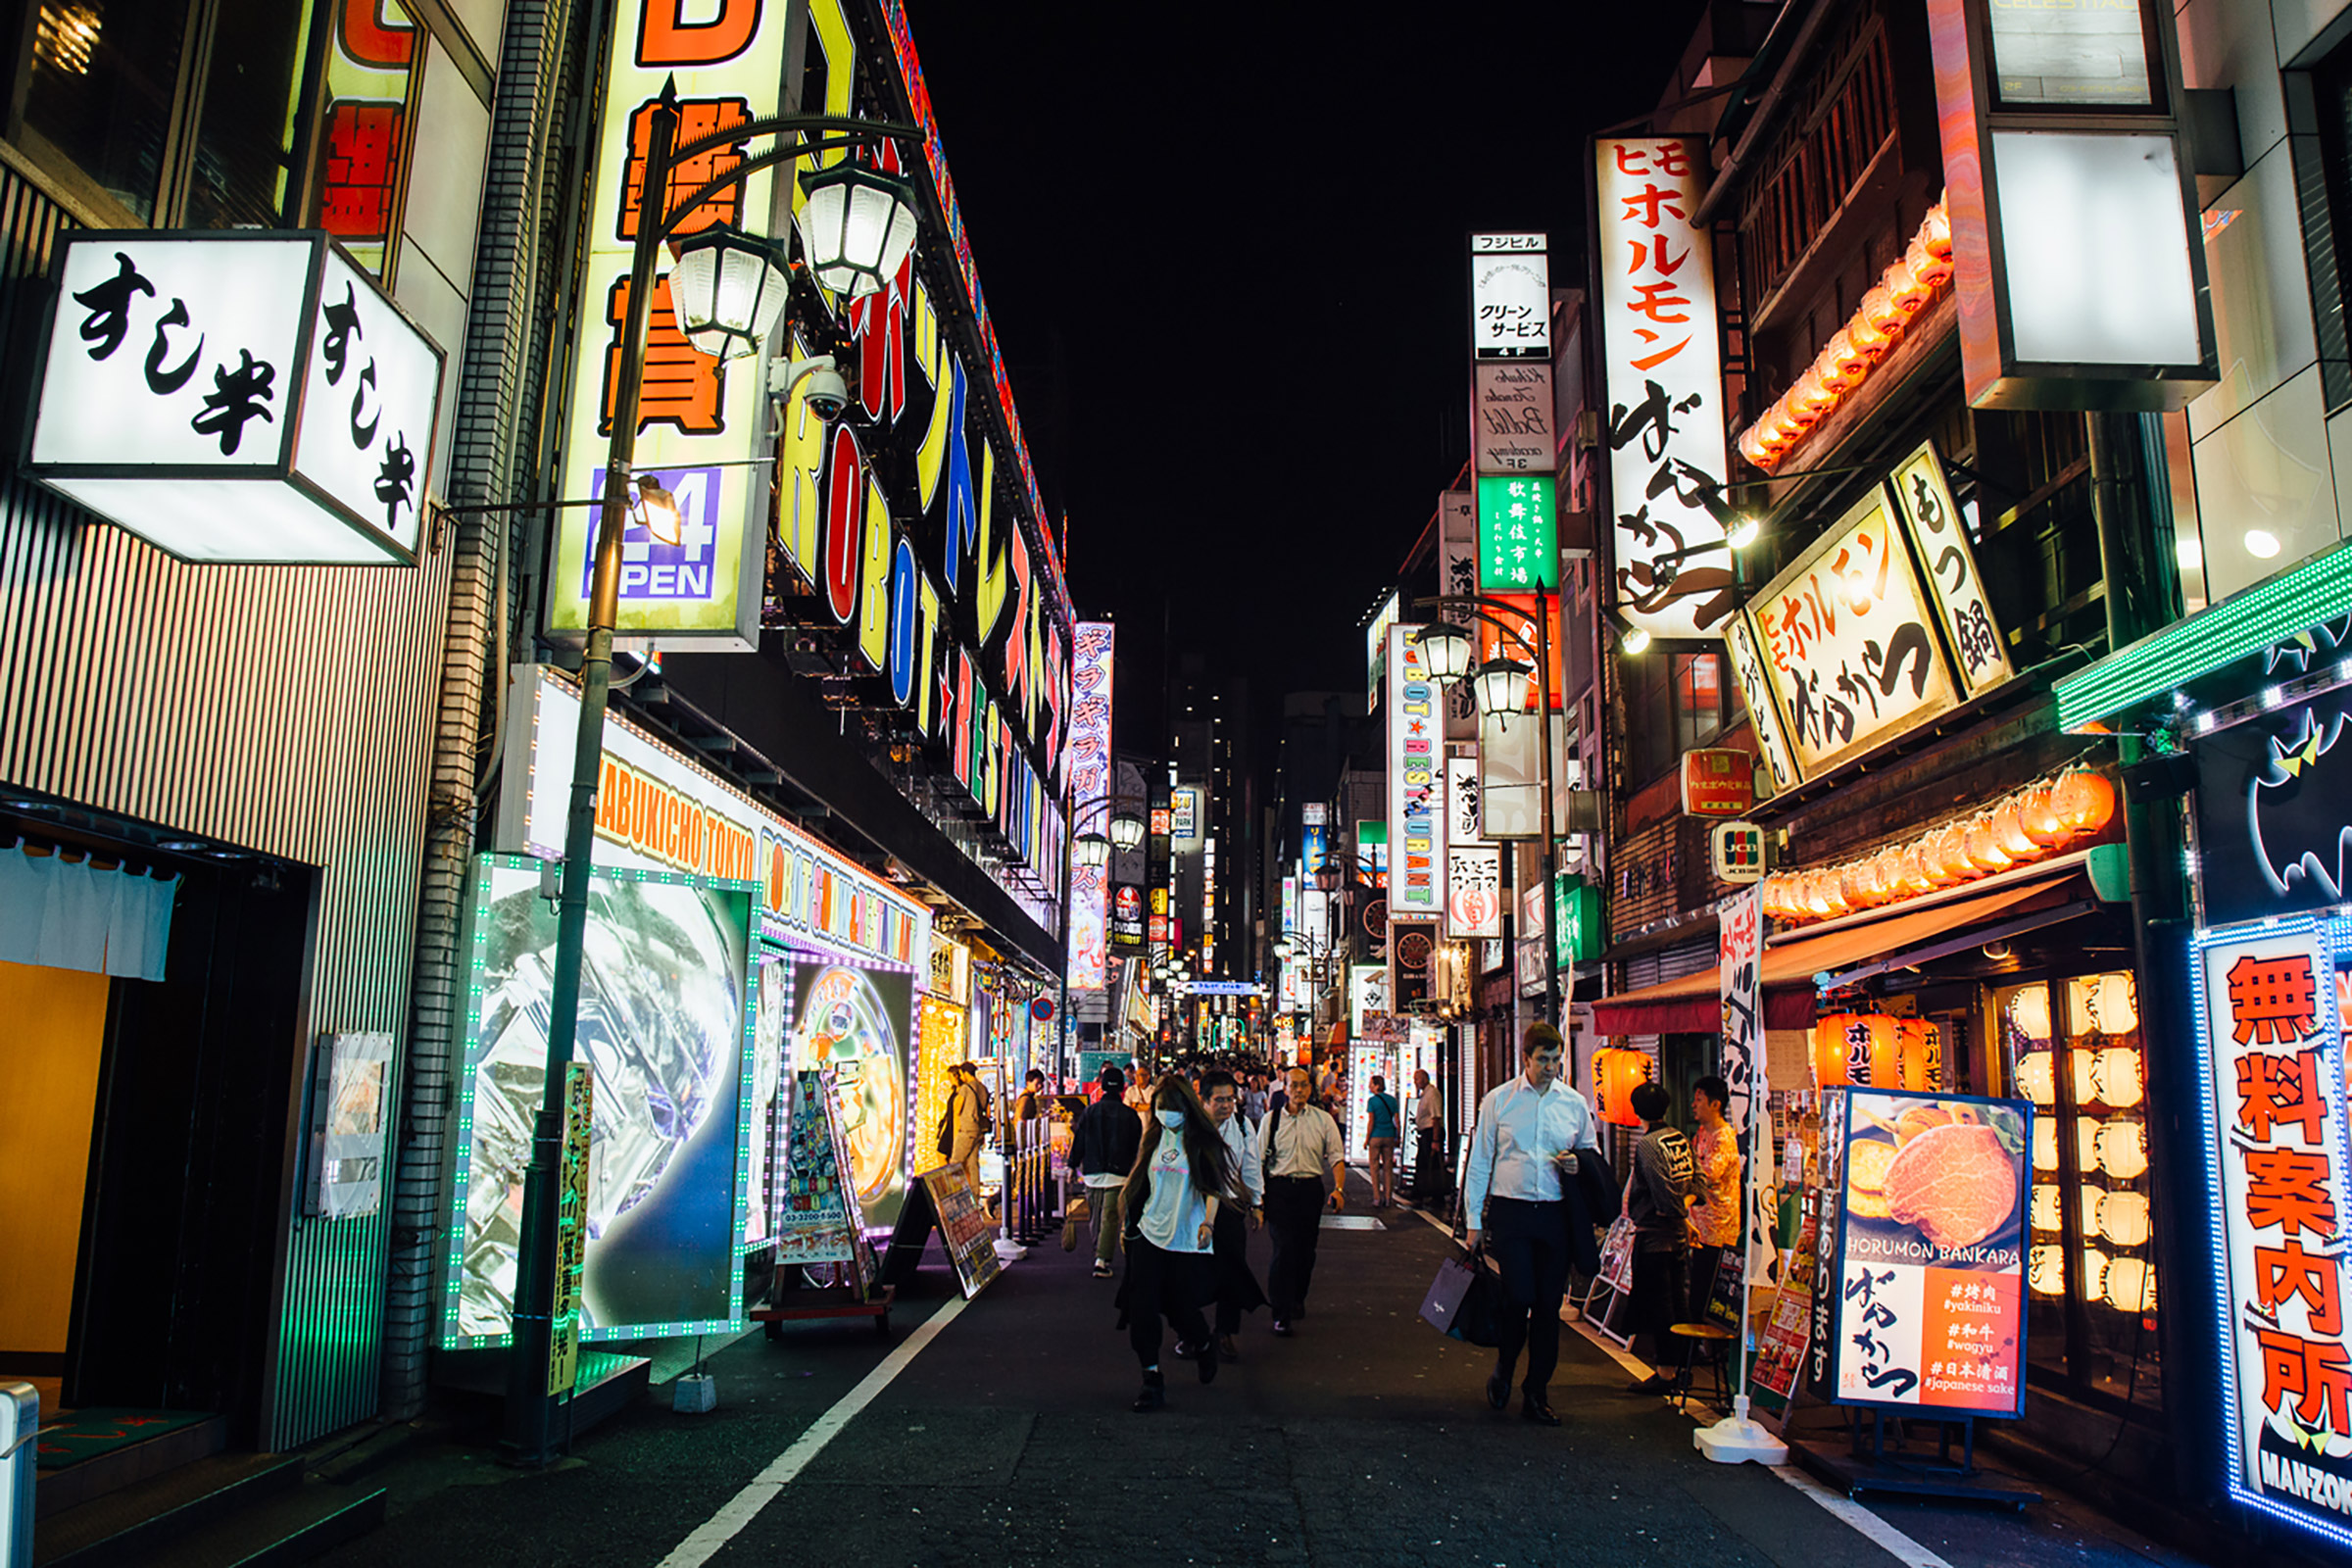 The Red-light district in Shinjyuku, Tokyo (Kenji Chiga for TIME)